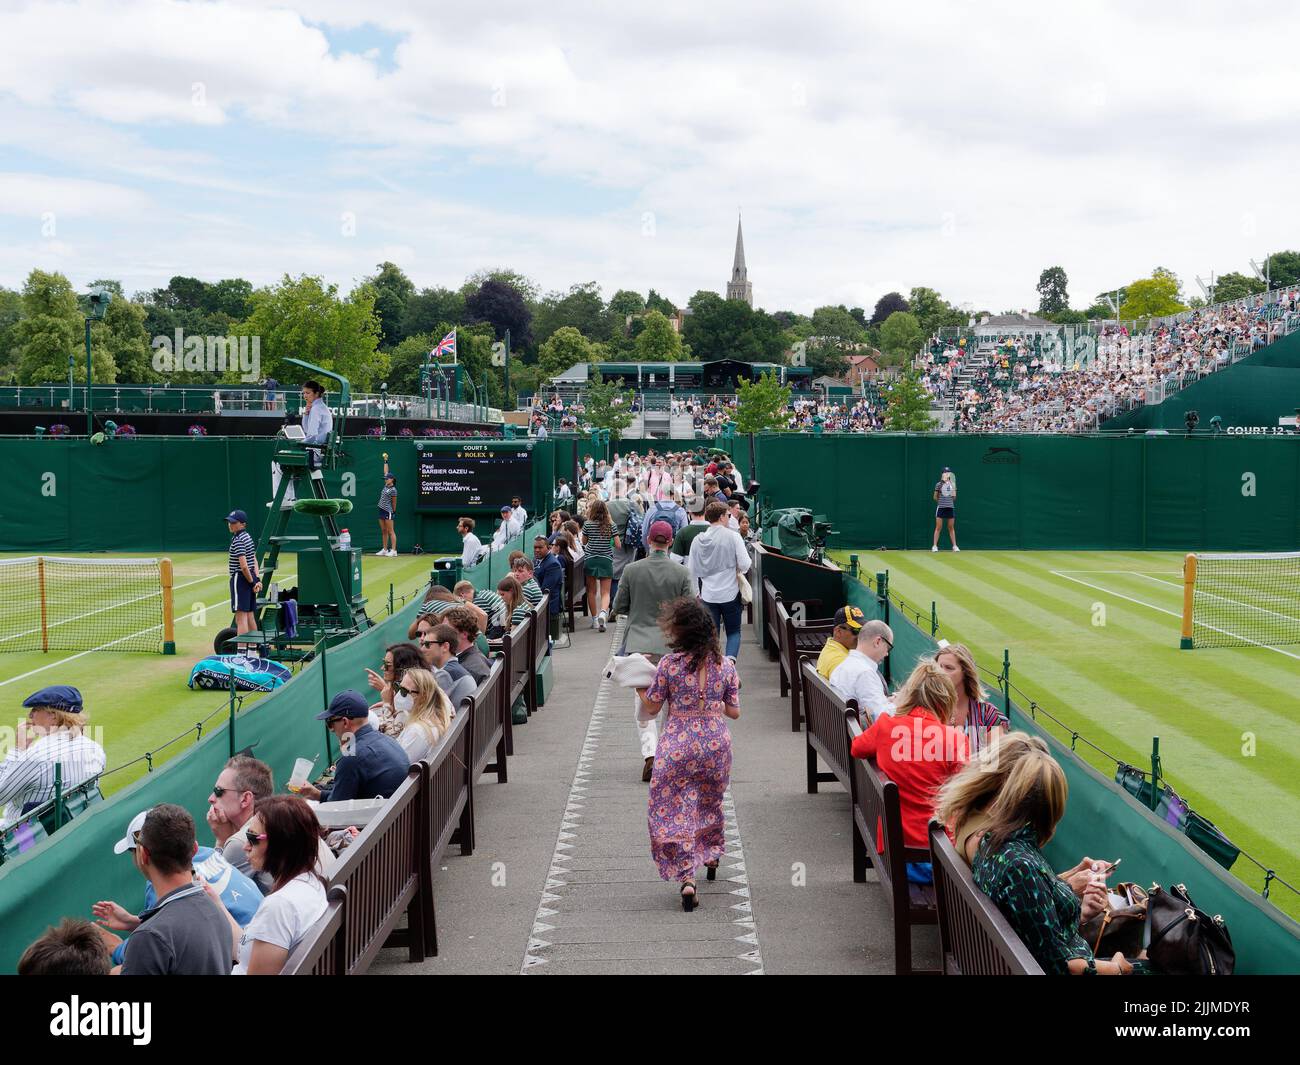 Wimbledon, Gran Londres, Inglaterra, Julio 02 2022: Campeonato de Tenis de Wimbledon. Pasarela entre las canchas exteriores, los espectadores y un árbitro y un muchacho de pelota Foto de stock